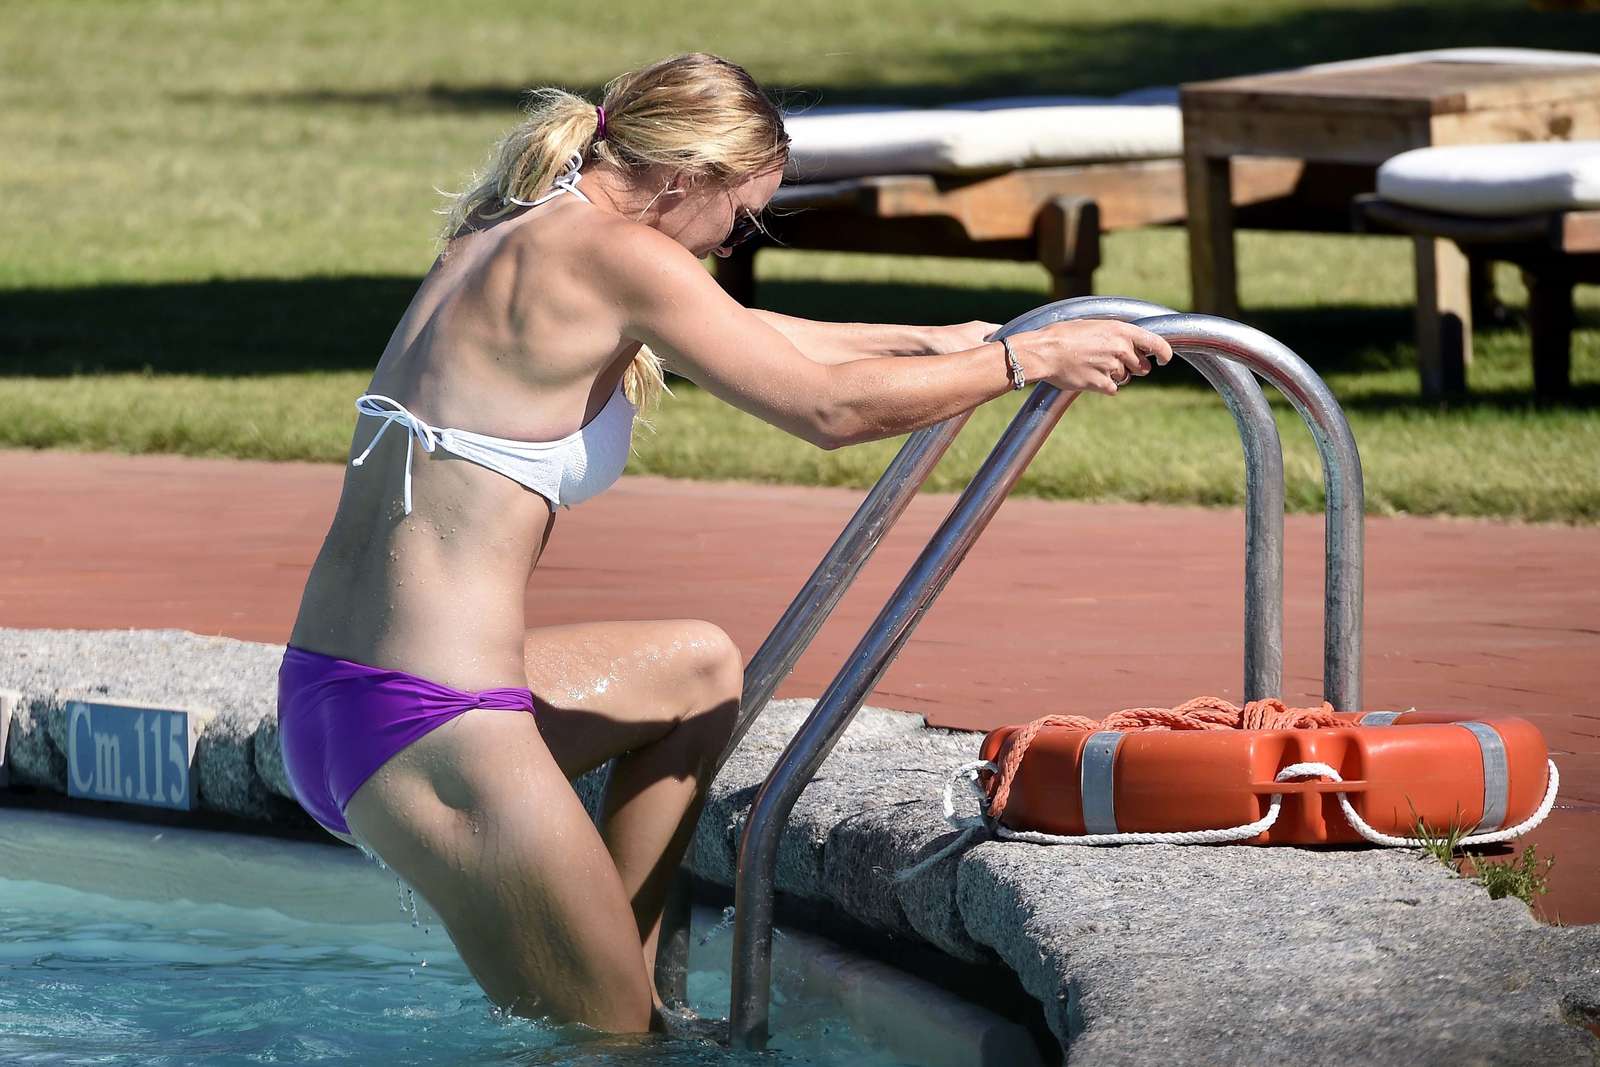 Caroline Wozniacki in Bikini at a pool in in Italy. 